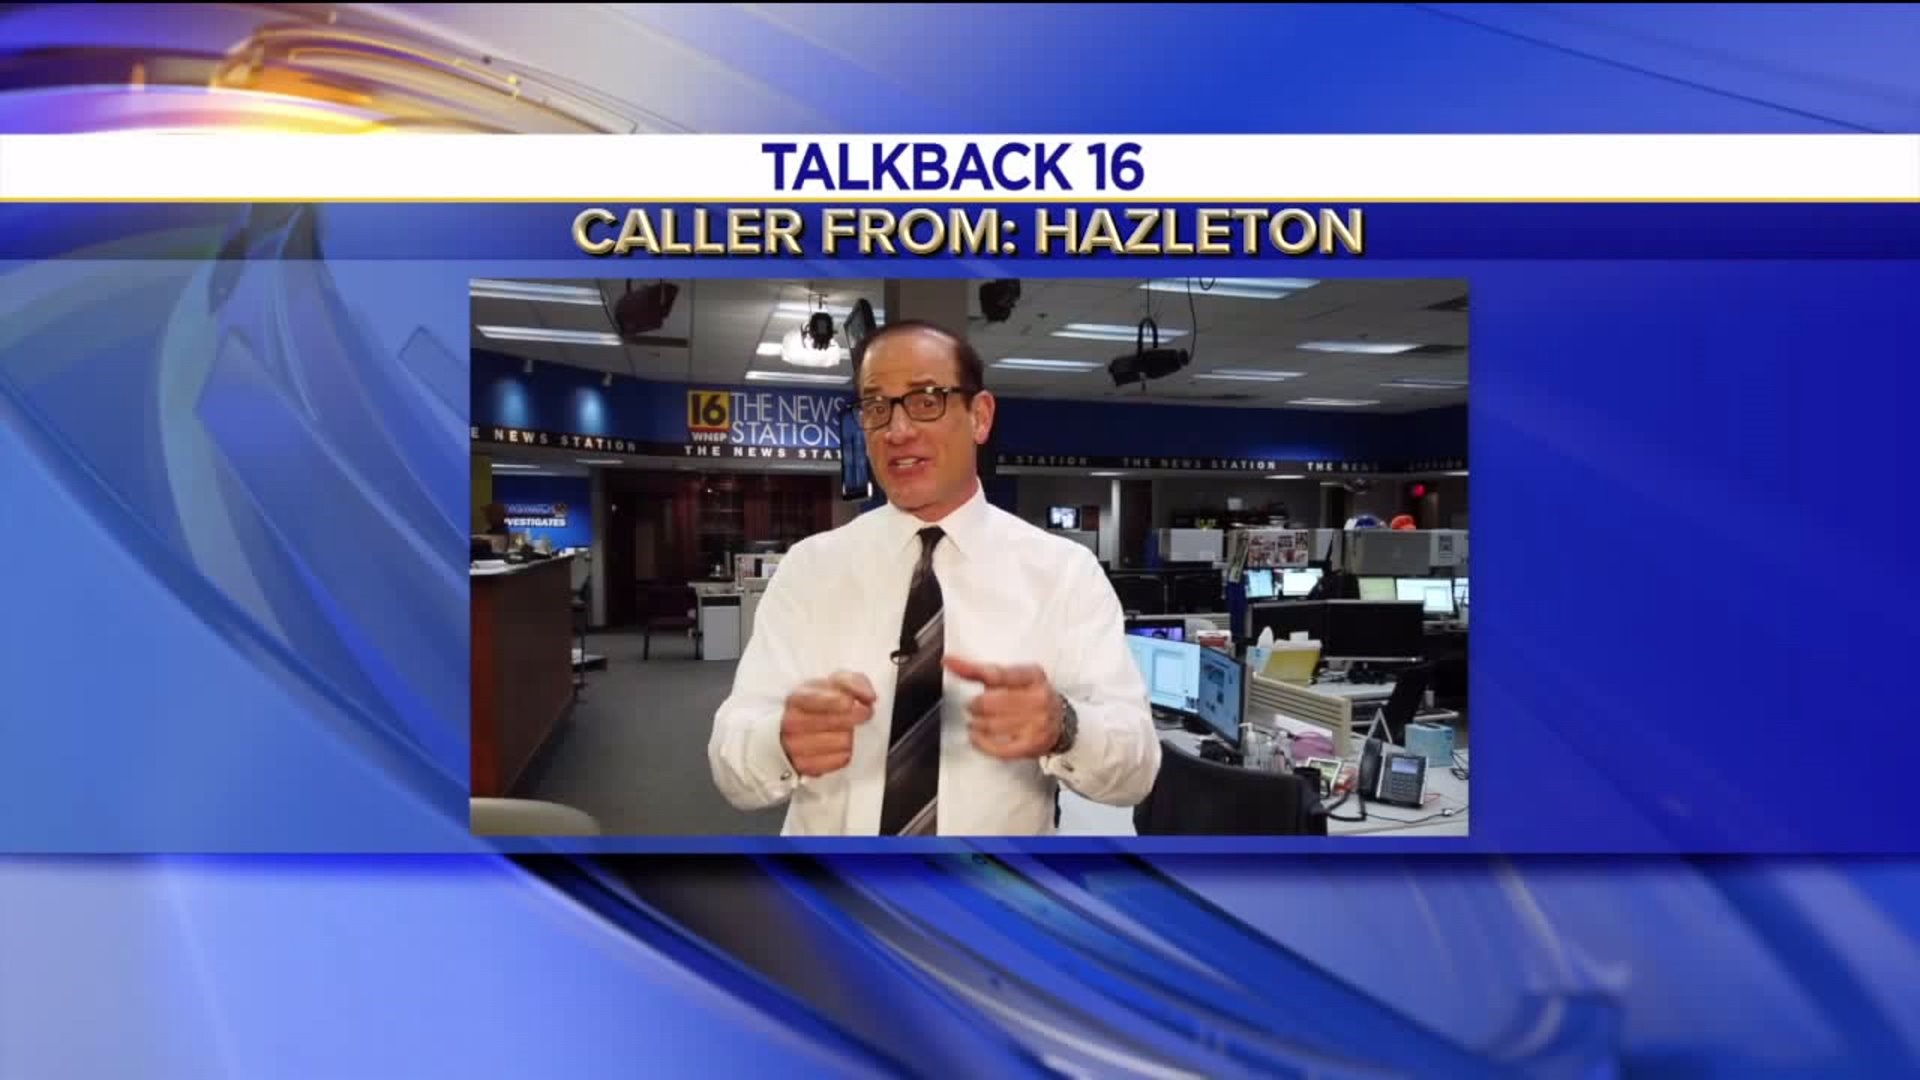 Talkback Feedback: Cut Off Calls